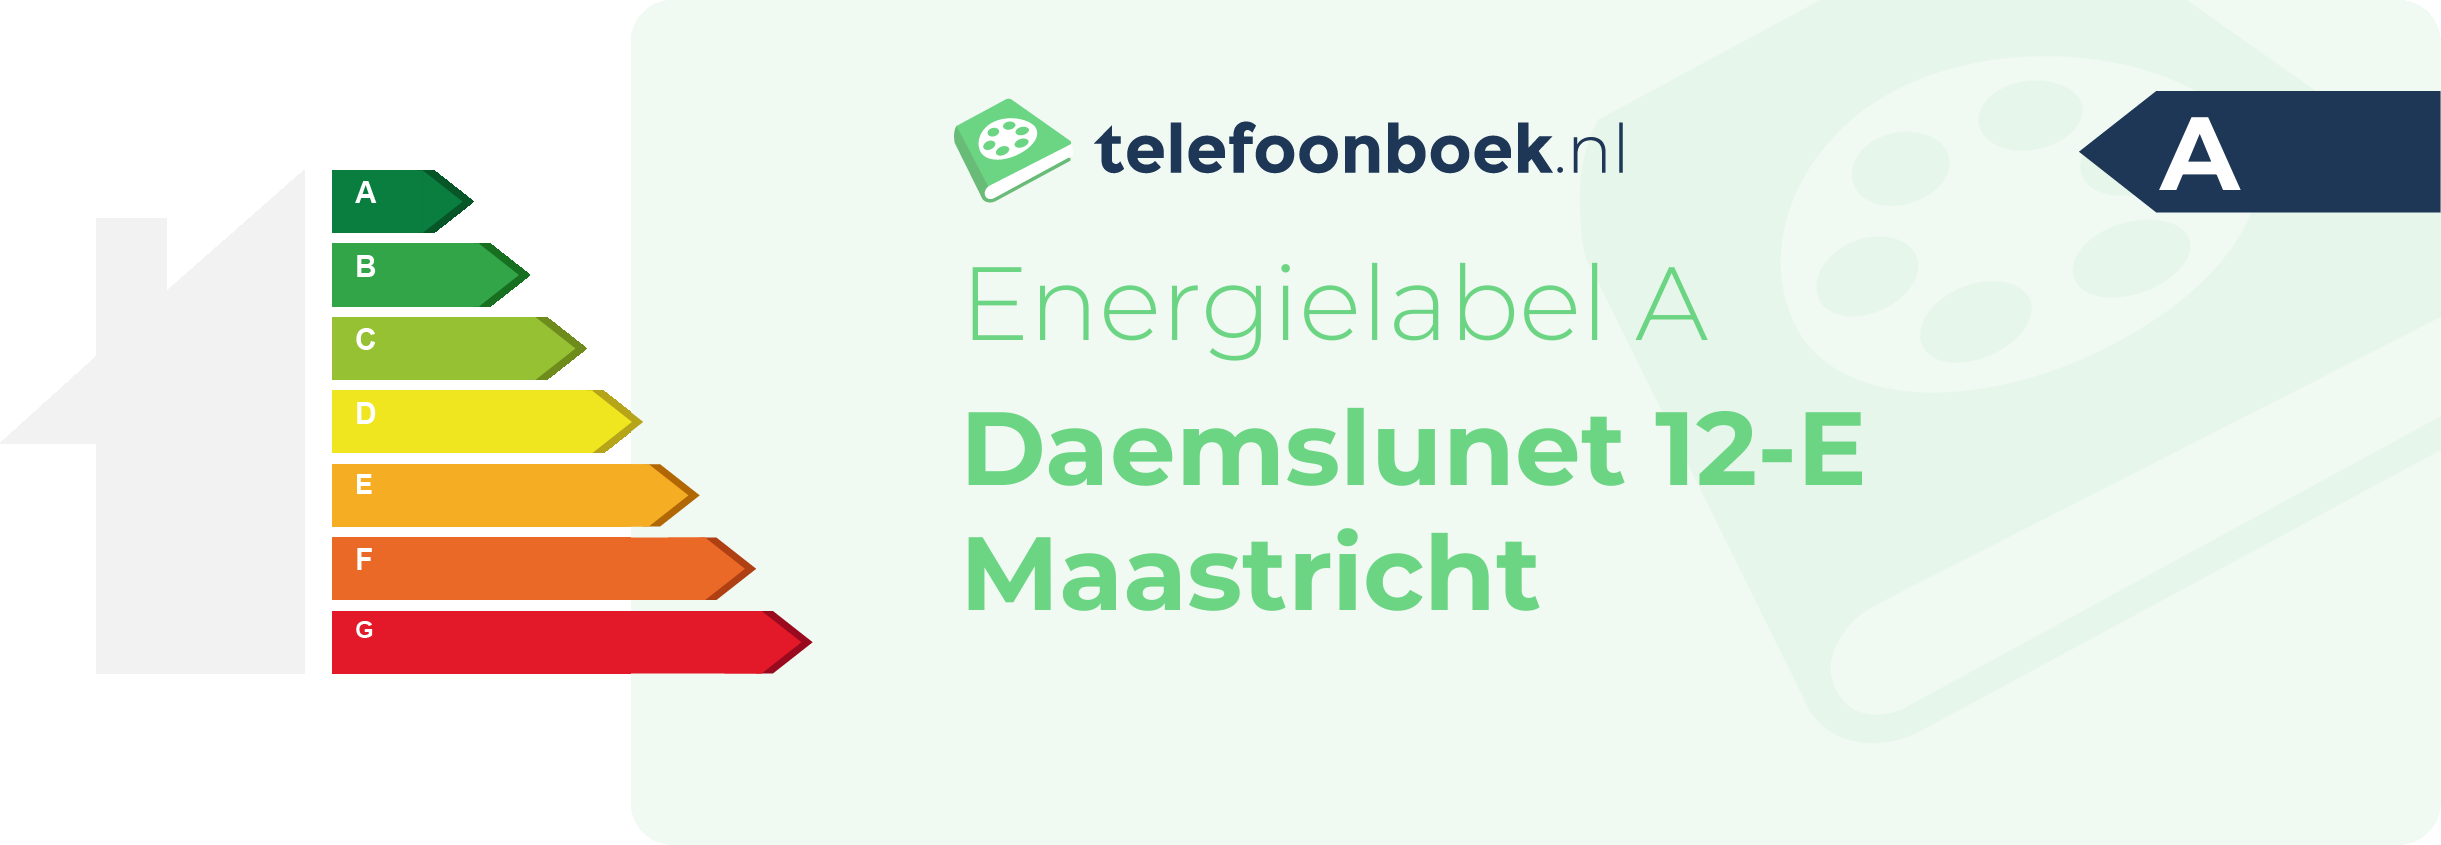 Energielabel Daemslunet 12-E Maastricht